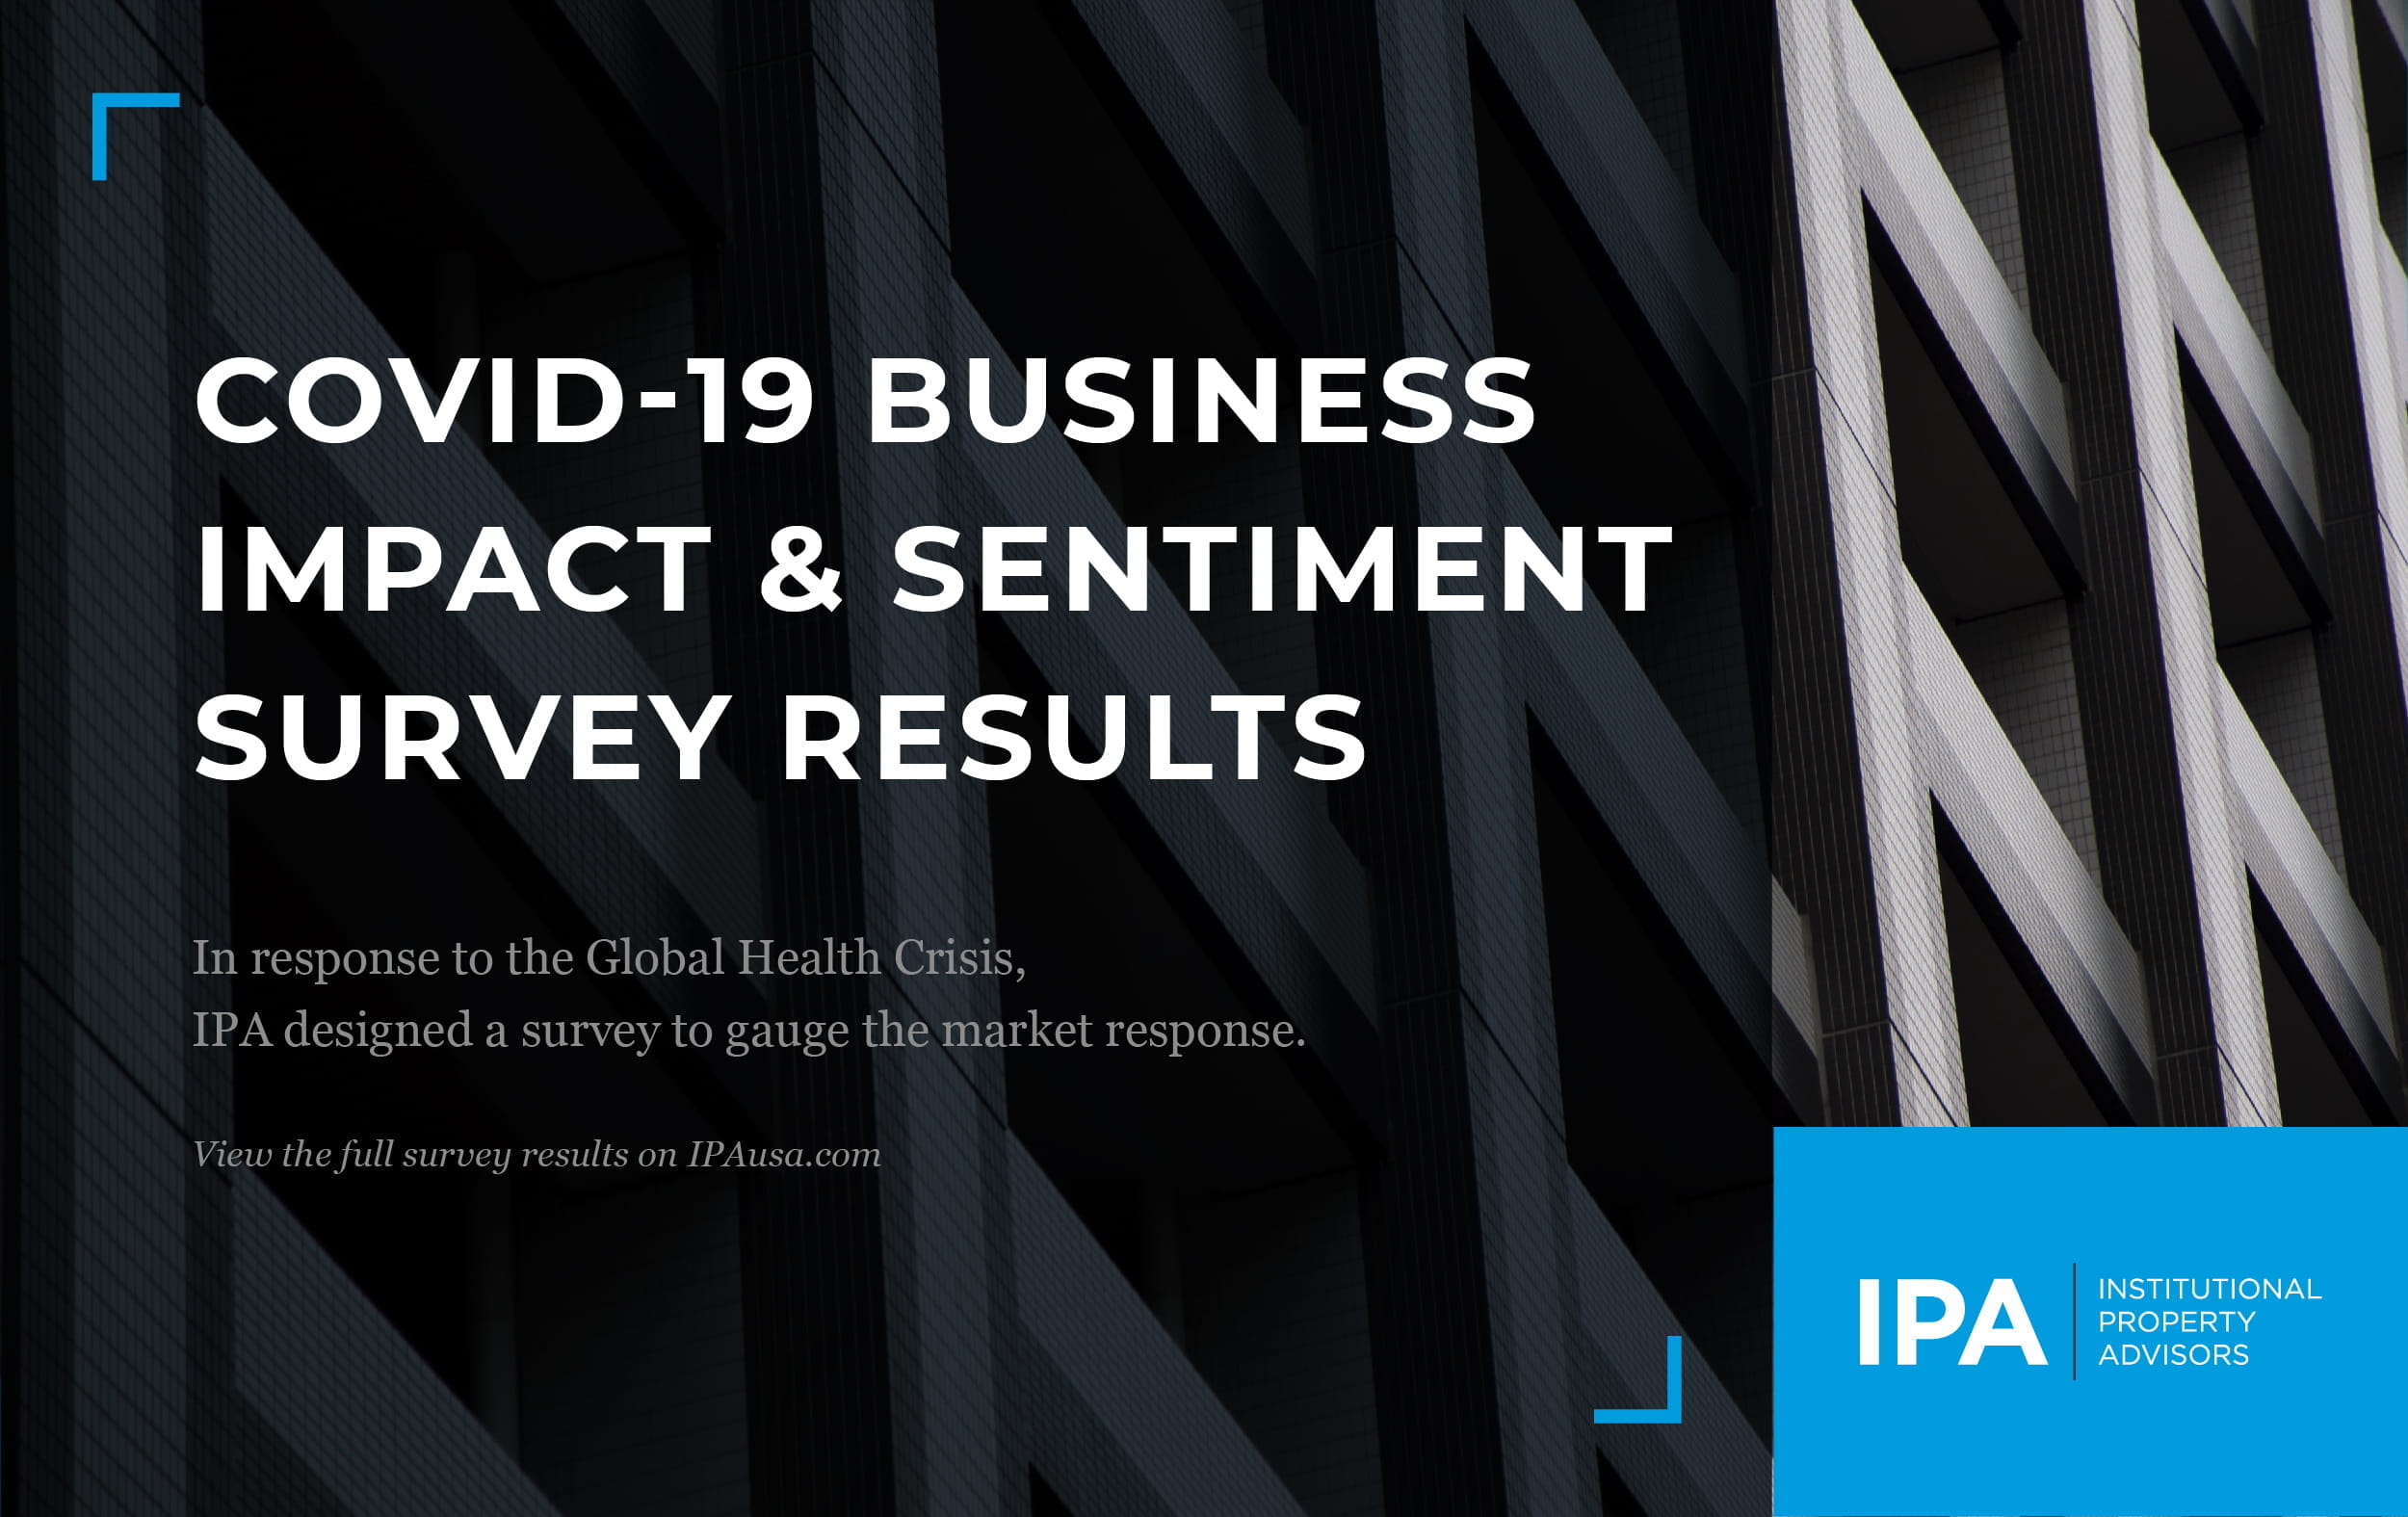 COVID-19 Impact & Sentiment Survey Results